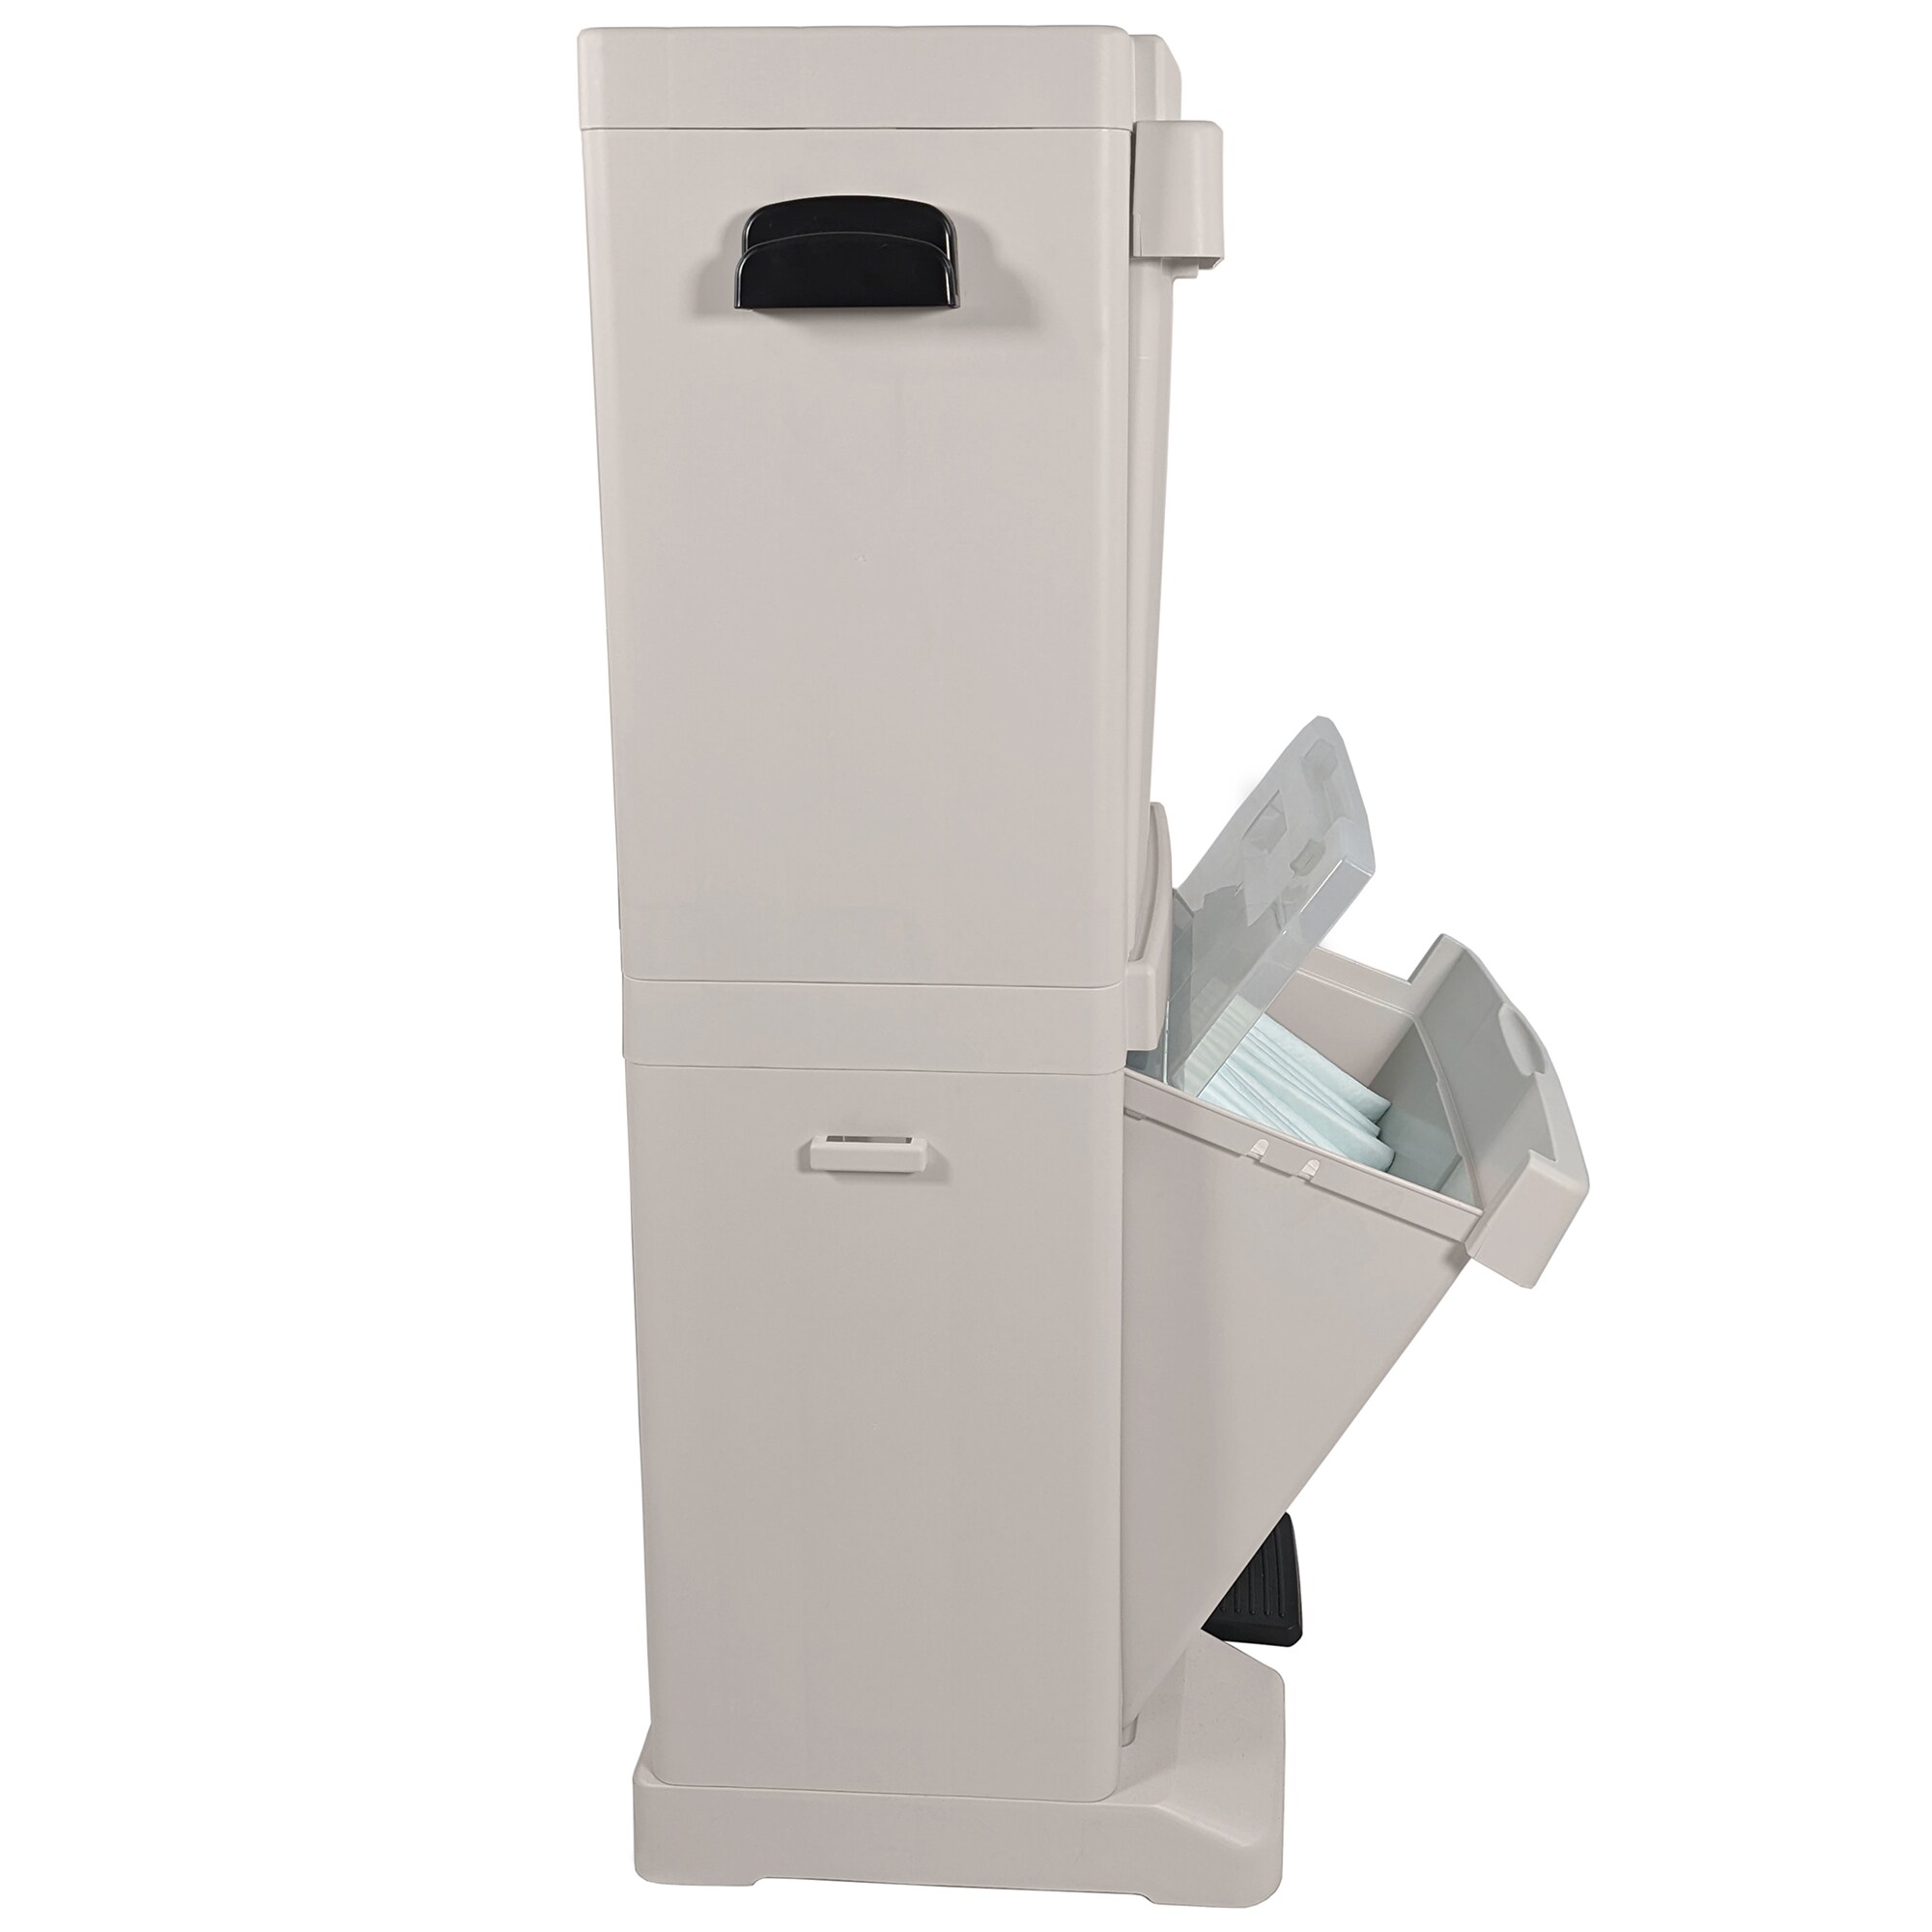 Plastic Locker Bins with Handles, 12x7x8.5-in.